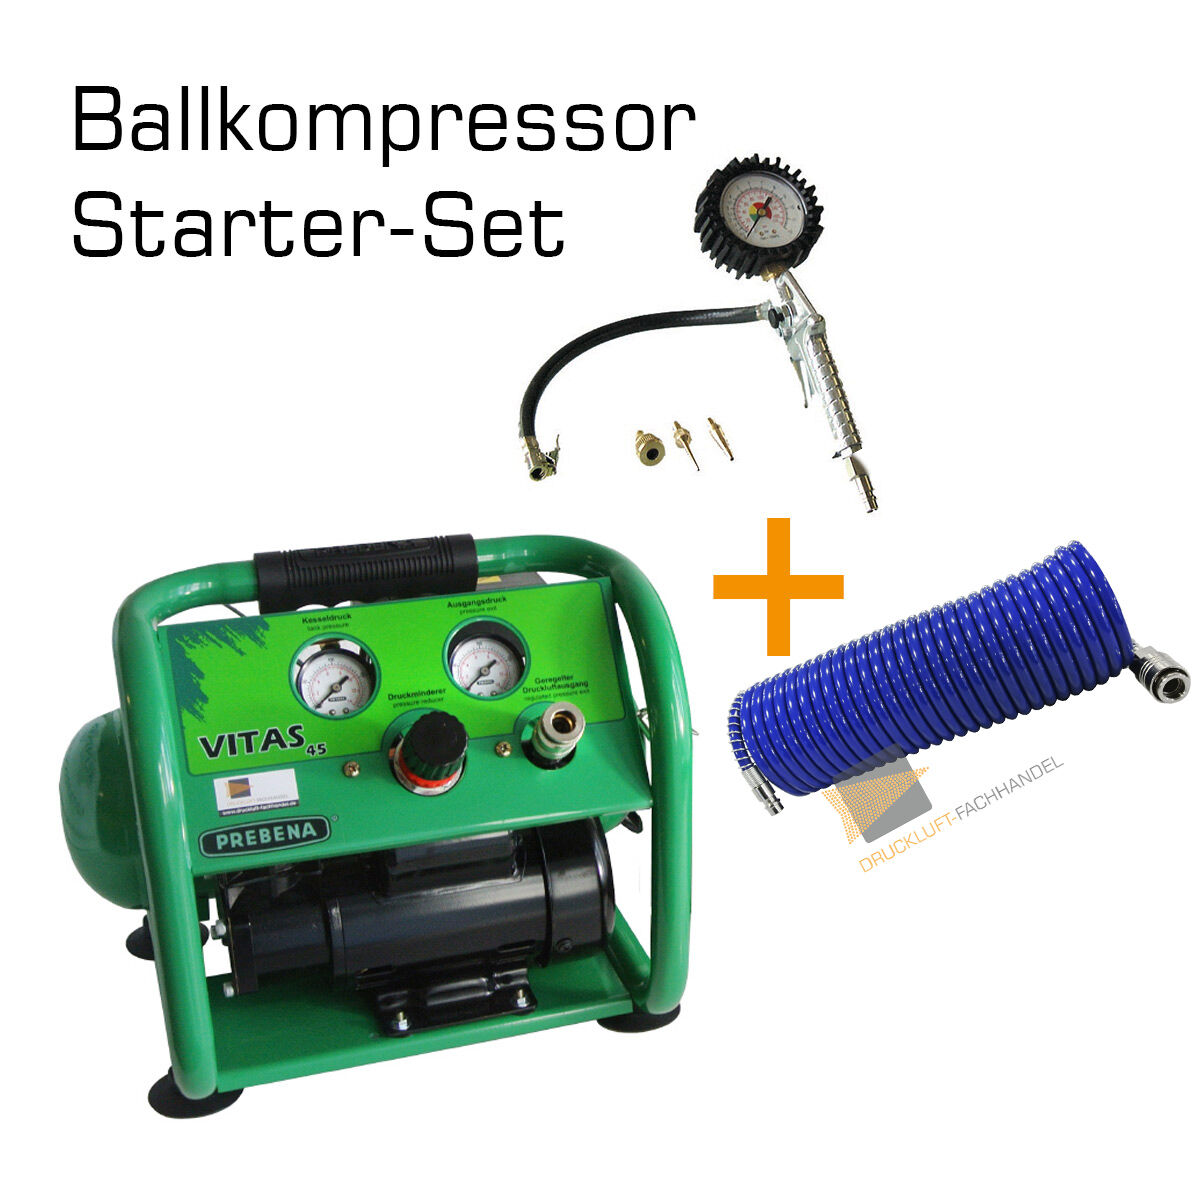 Starter-Set Ballkompressor Prebena Vitas 45 + Schlauchset + Reifenfüller